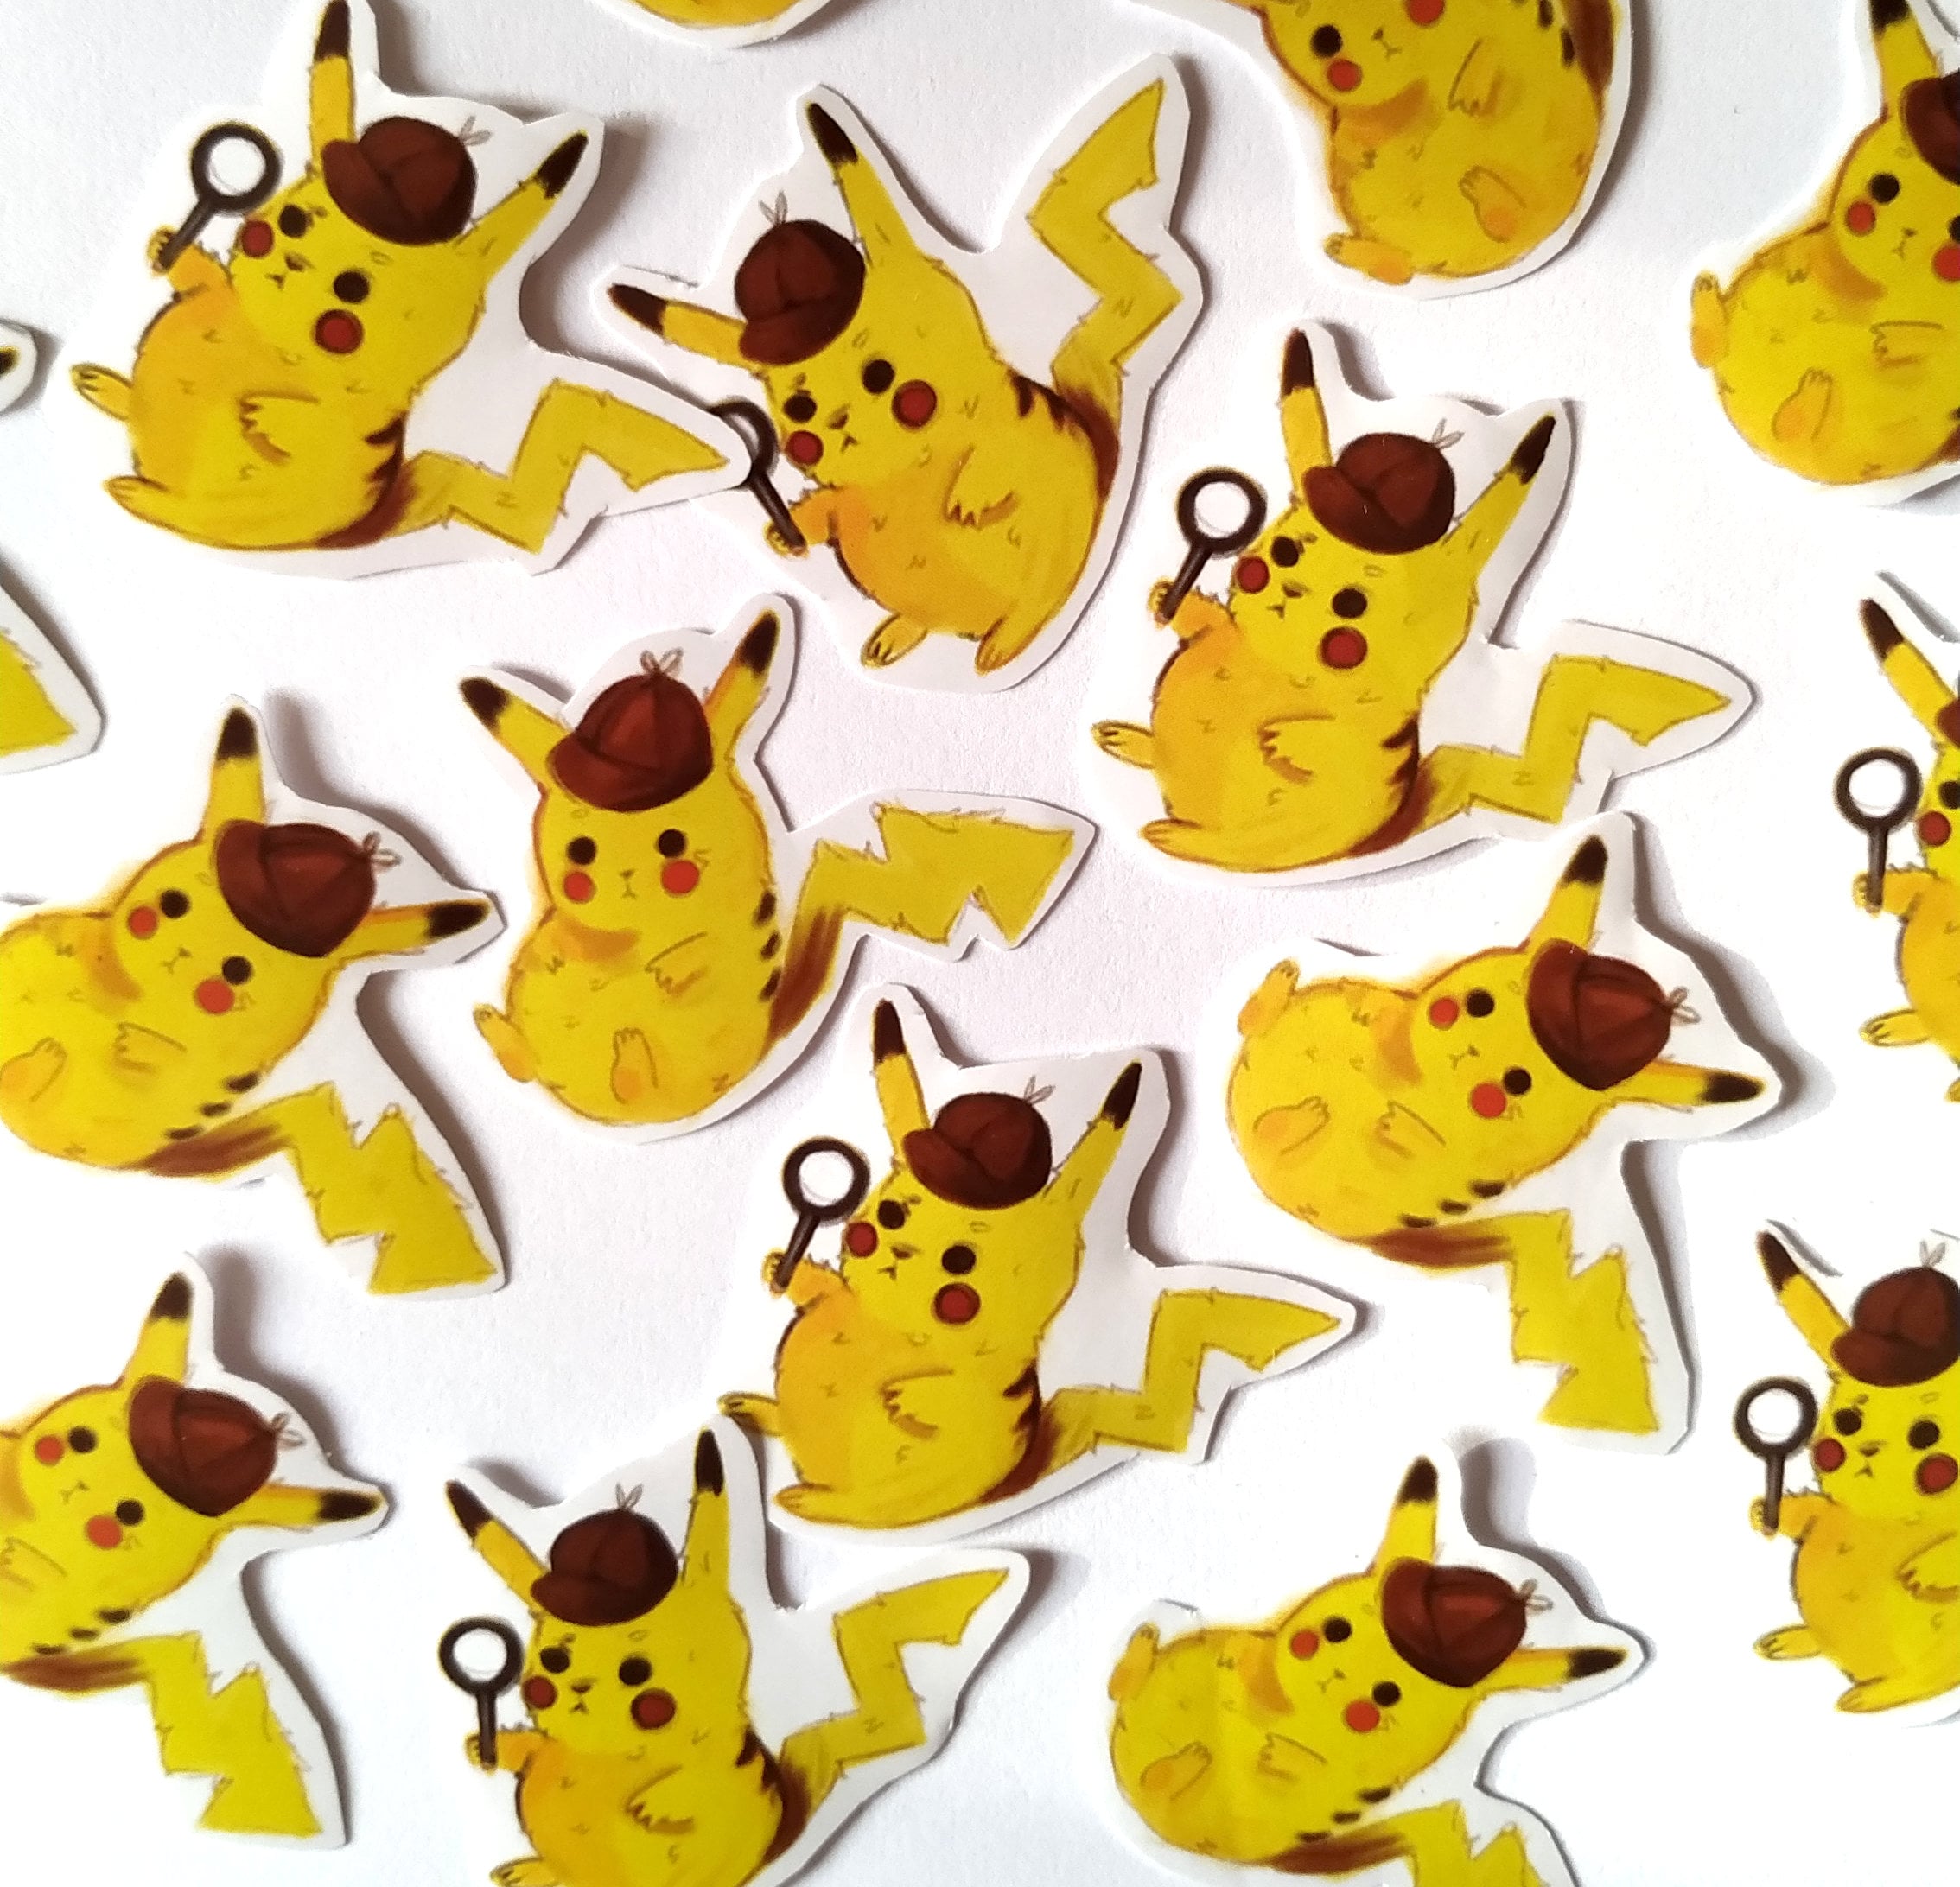 Detective Pikachu Sticker 